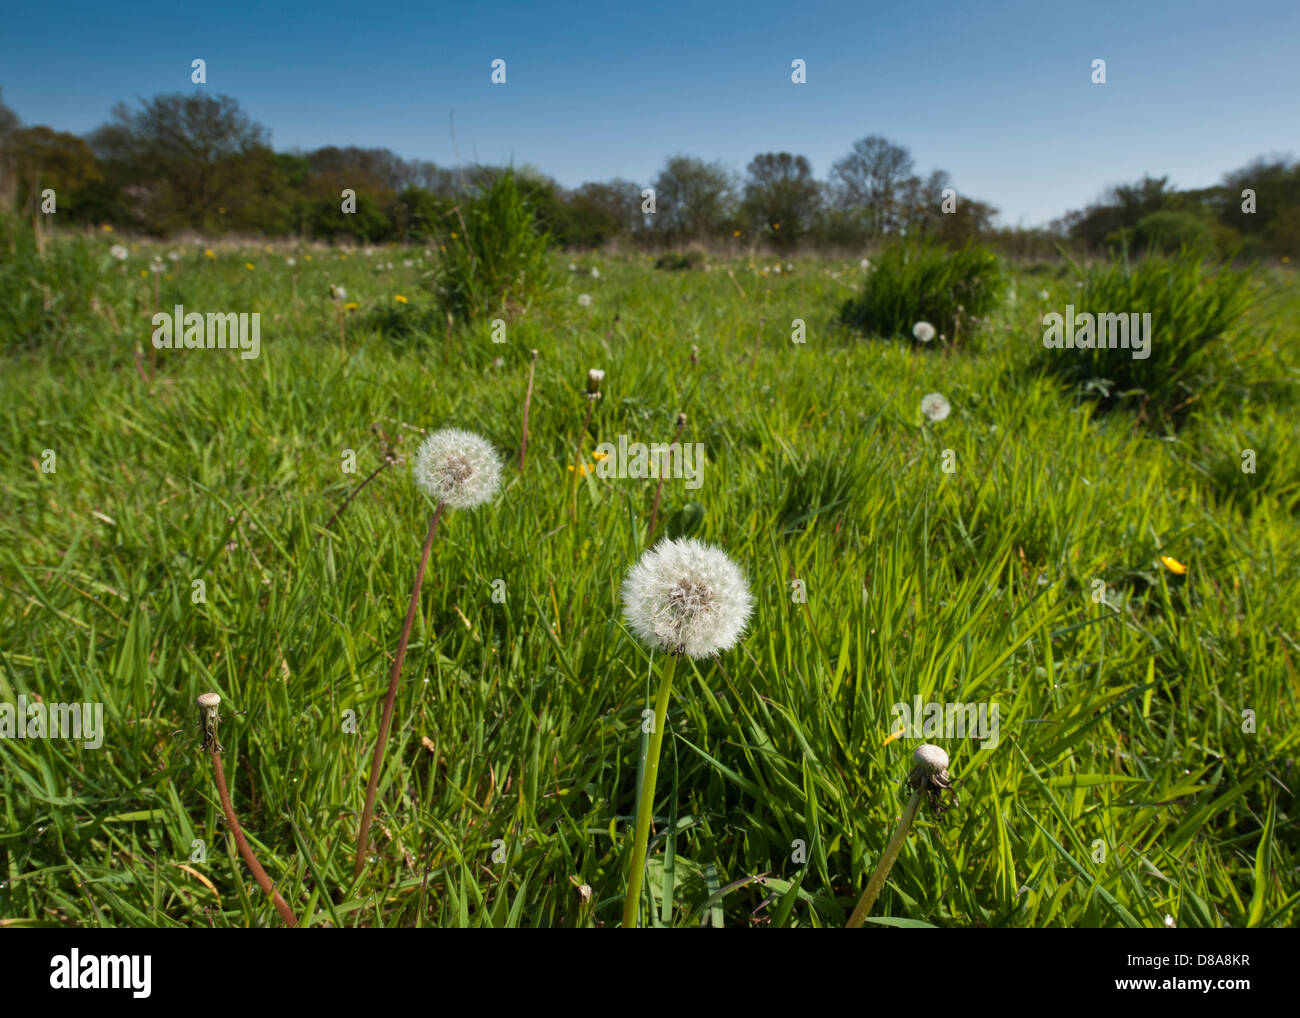 Dandelion growing amongst wild grass. Stock Photo